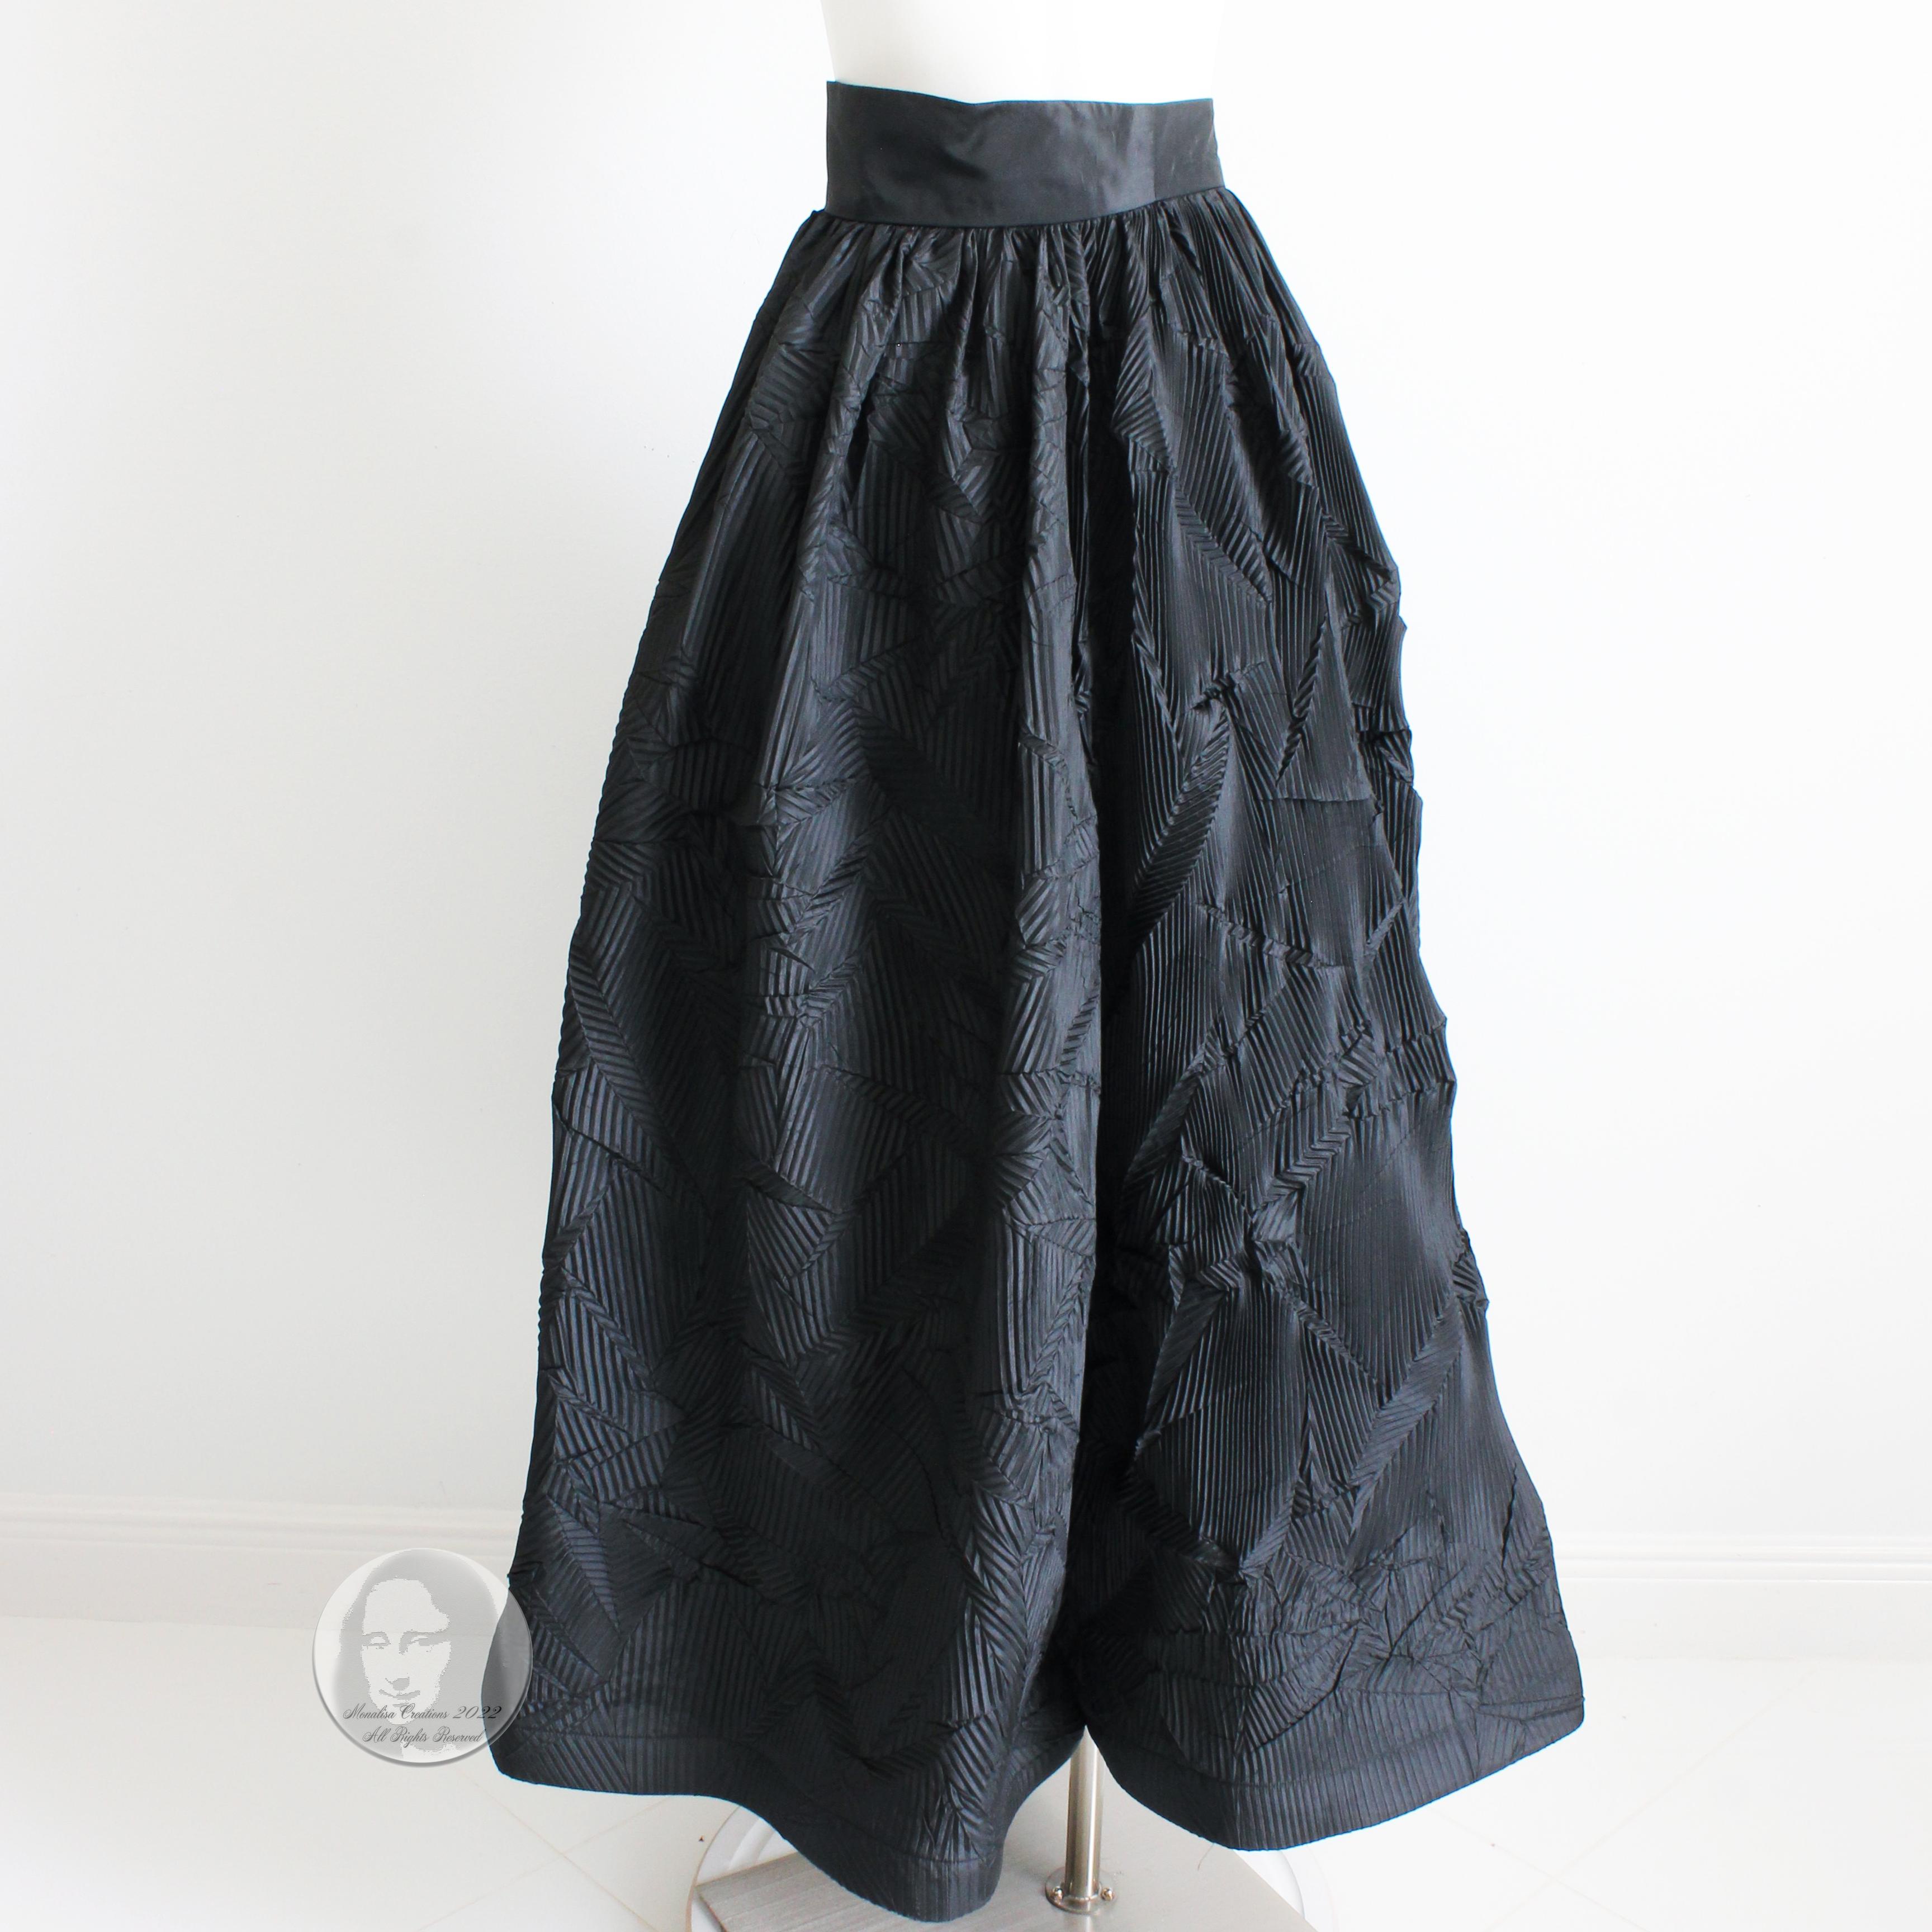 cyberpunk avant guarde black skirt